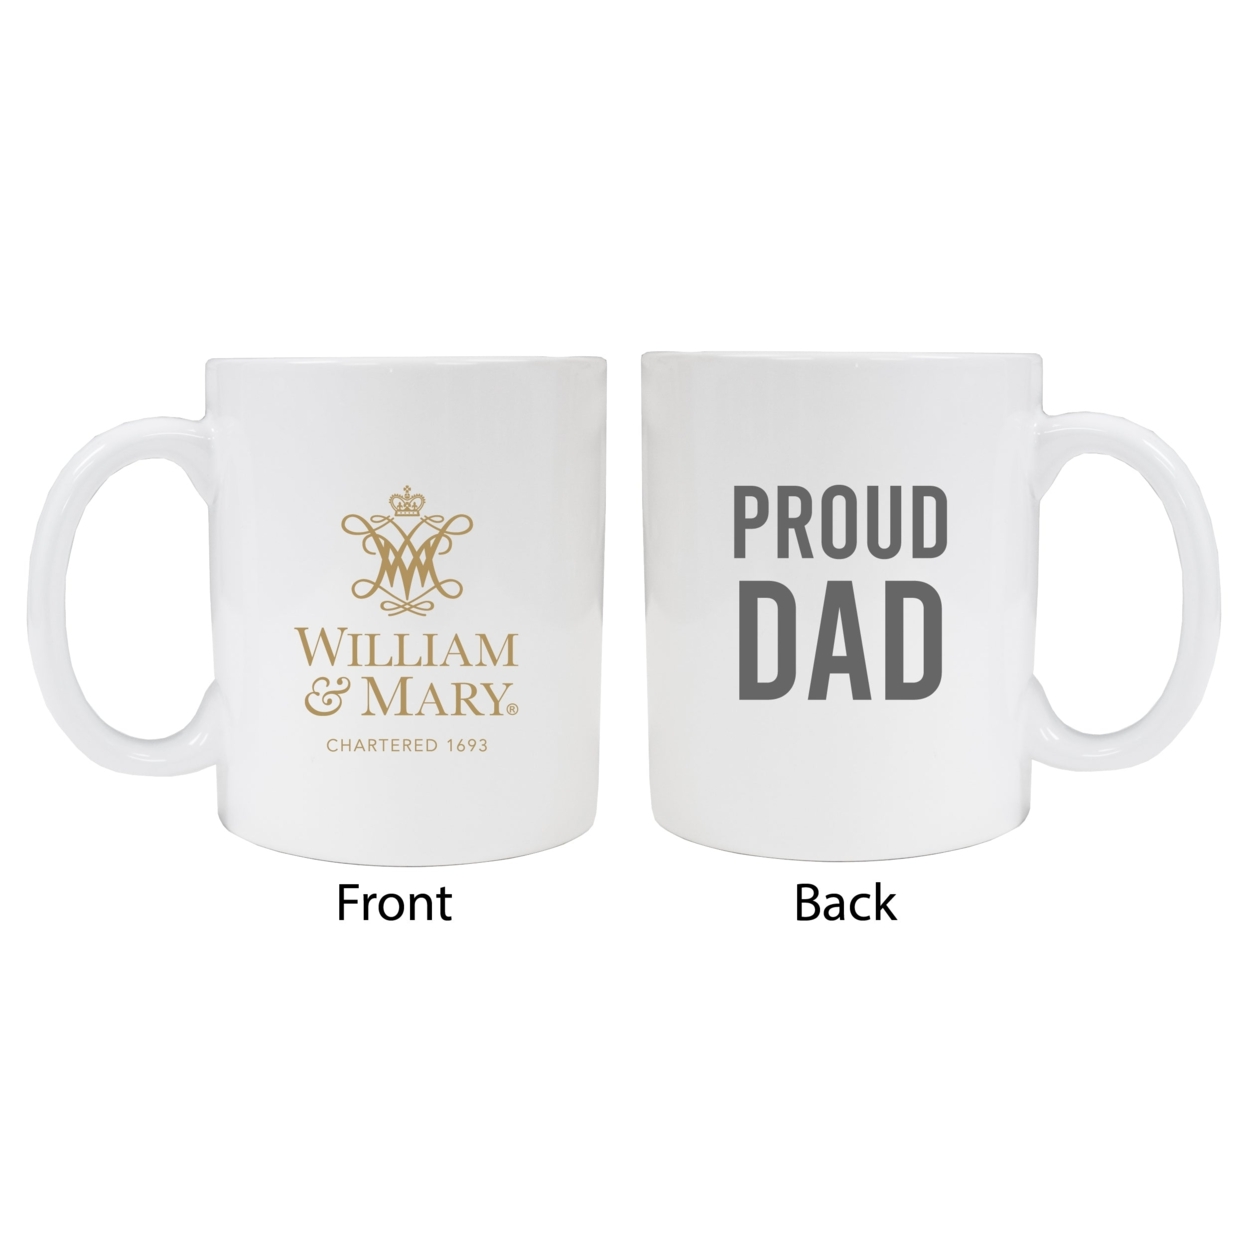 William And Mary Proud Dad Ceramic Coffee Mug - White (2 Pack)